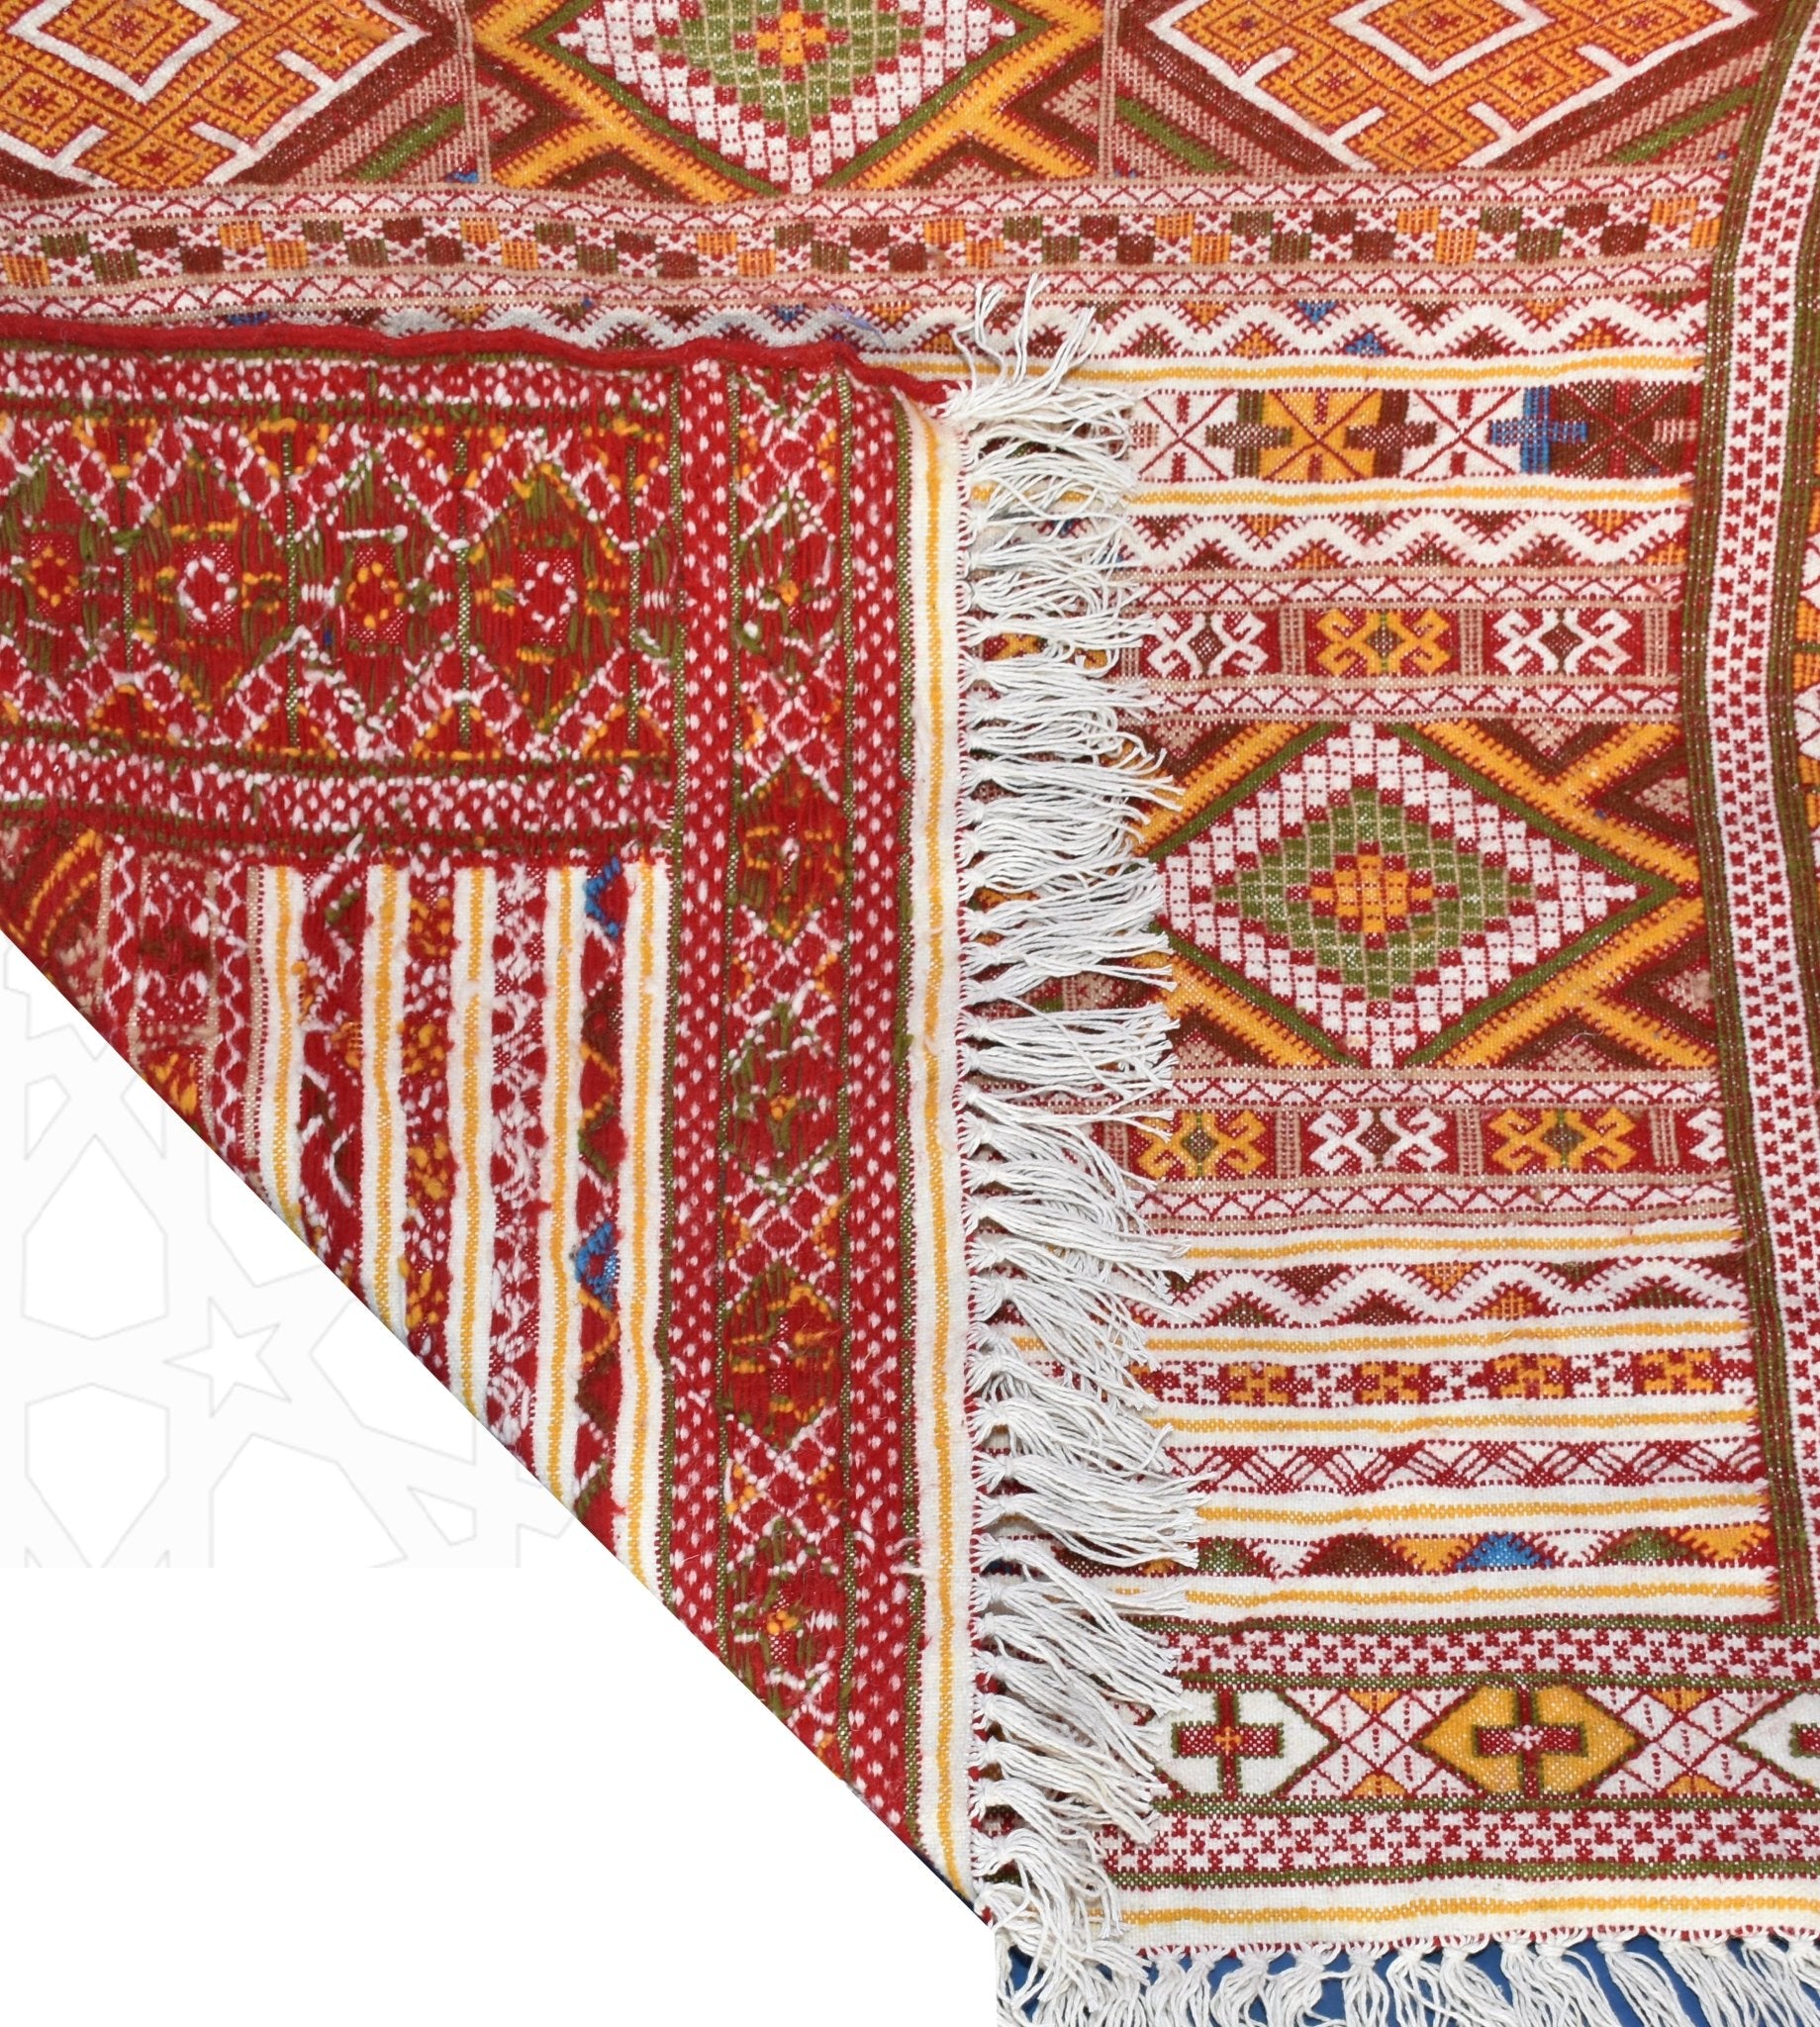 Flatweave kilim hanbal Moroccan rug - 3.94 x 6.1 ft / 120 x 185 cm - Berbers Market